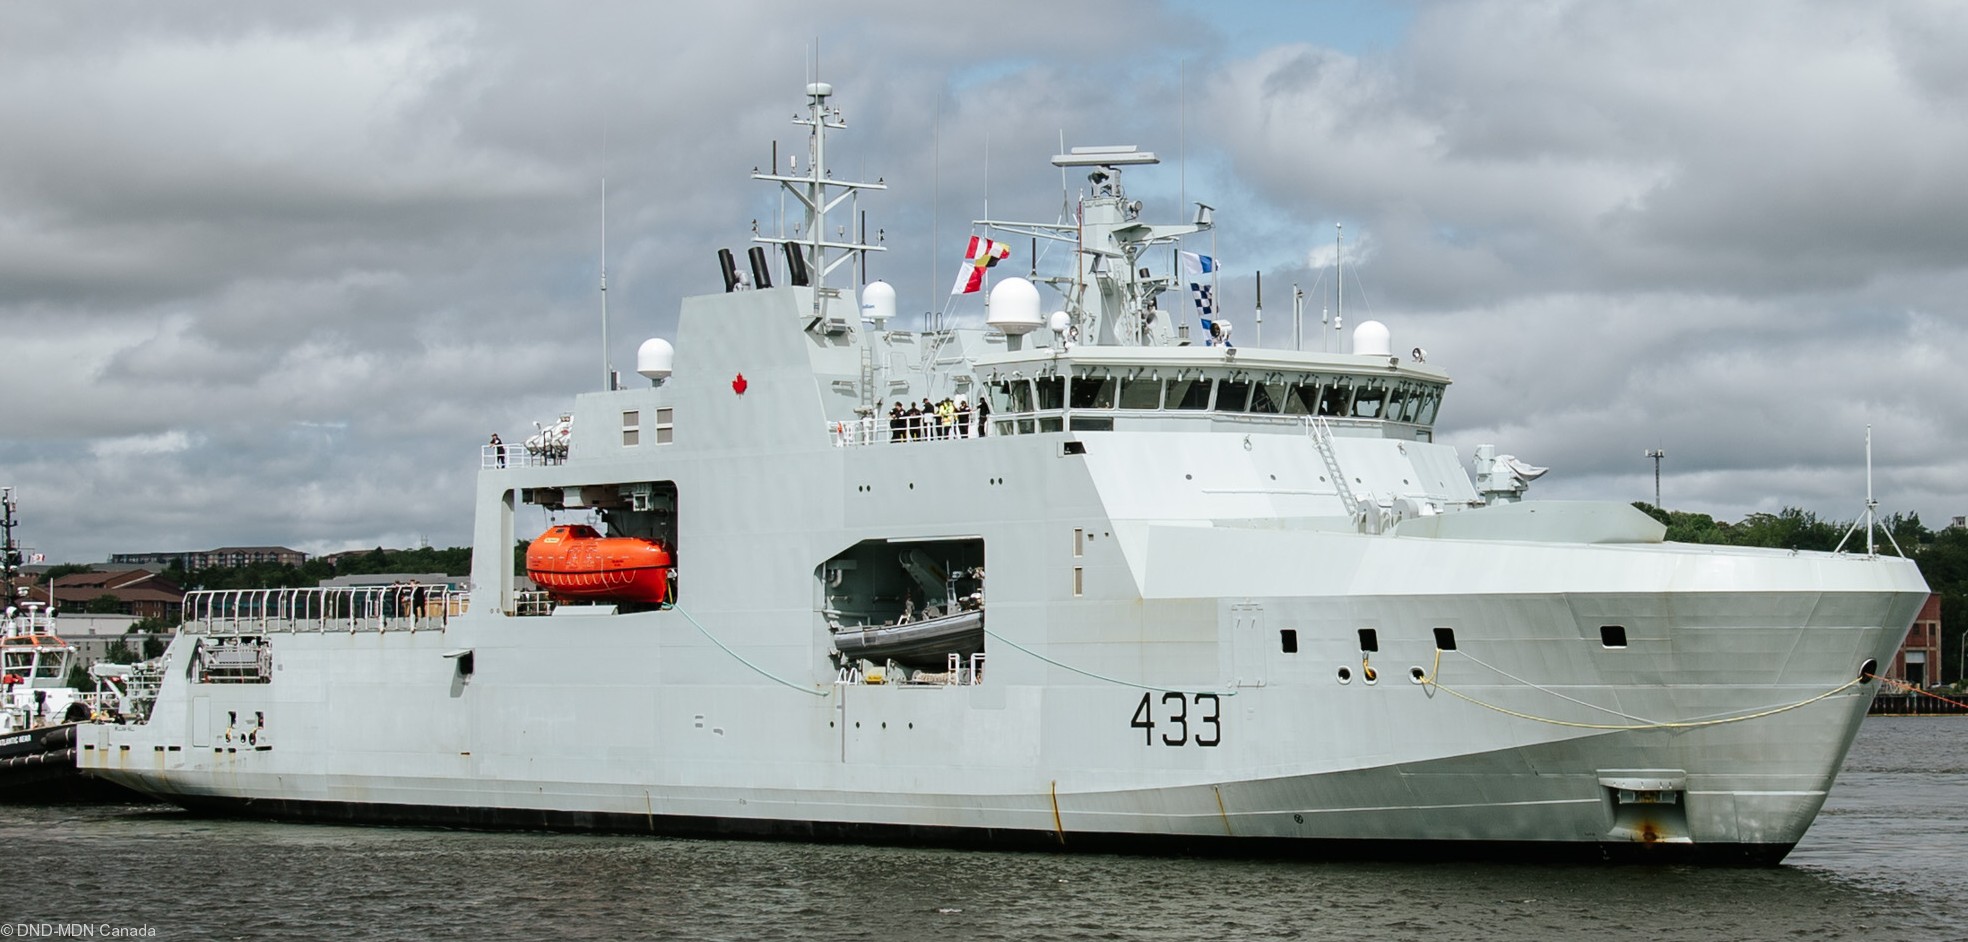 aopv-433 hmcs william hall harry dewolf class arctic offshore patrol vessel ship ncsm royal canadian navy 02x irving halifax